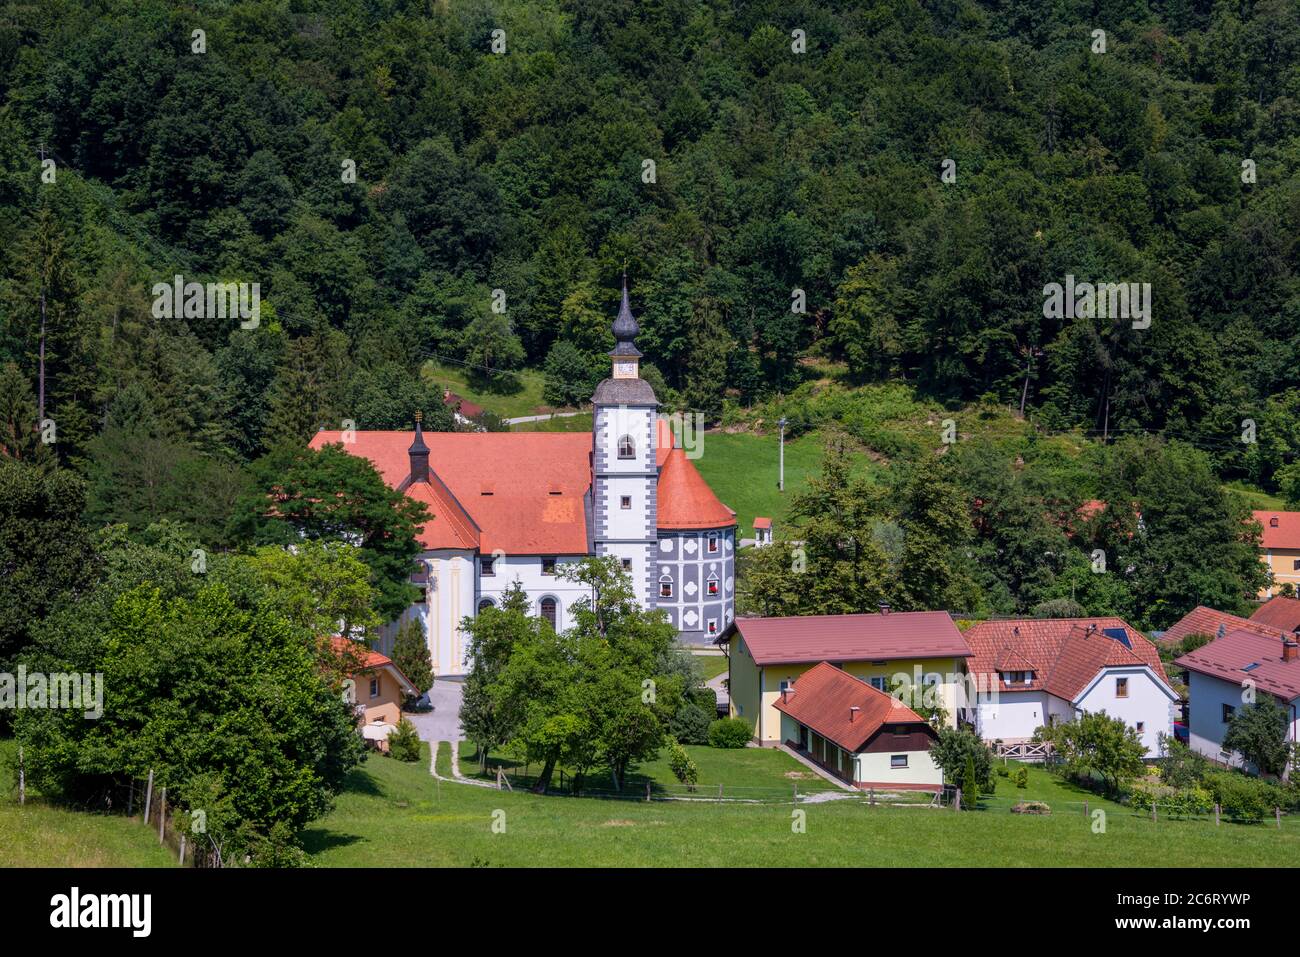 The Monastery in Olimje, Podcetrtek, Slovenia with old Pharmacy, Stock Photo